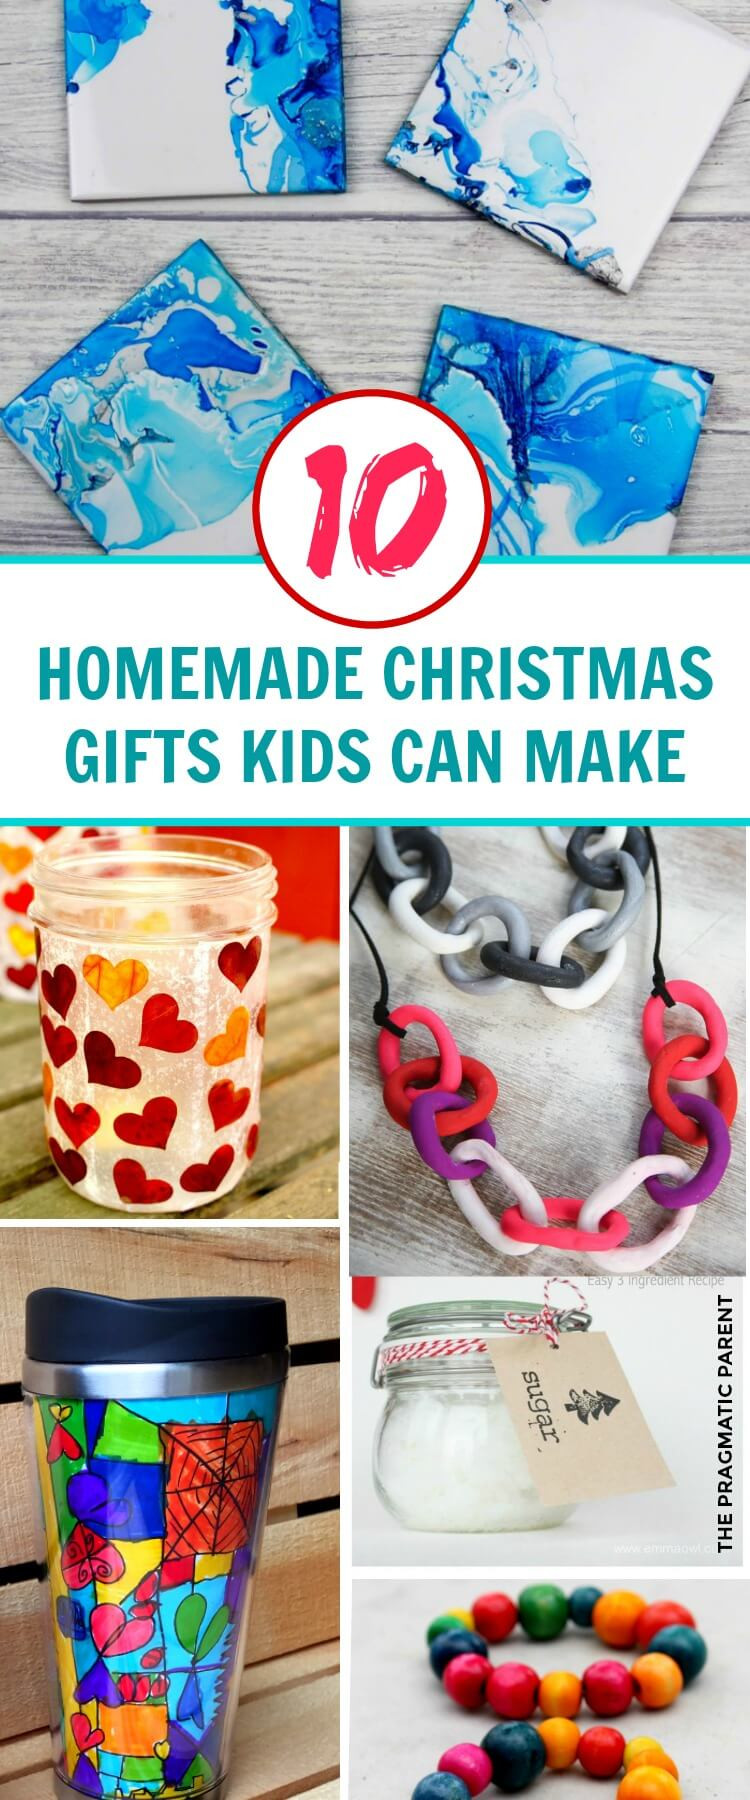 2020 Christmas Gifts Kids
 10 Beautiful Homemade Christmas Gifts Kids Can Make This 2020